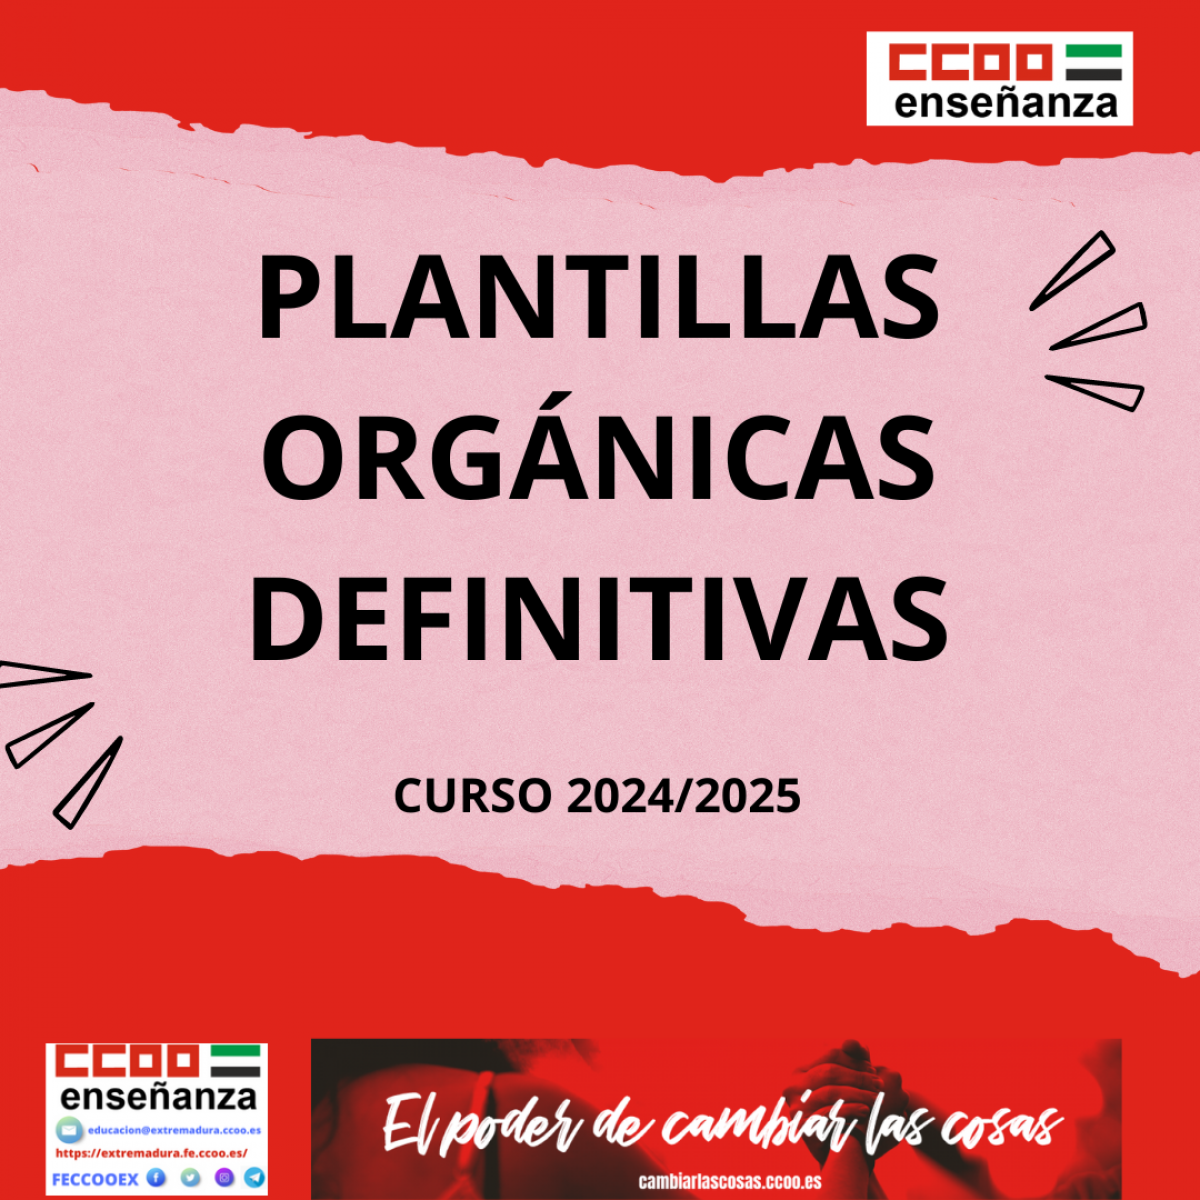 Plantilla orgánica definitiva curso 2024-2025